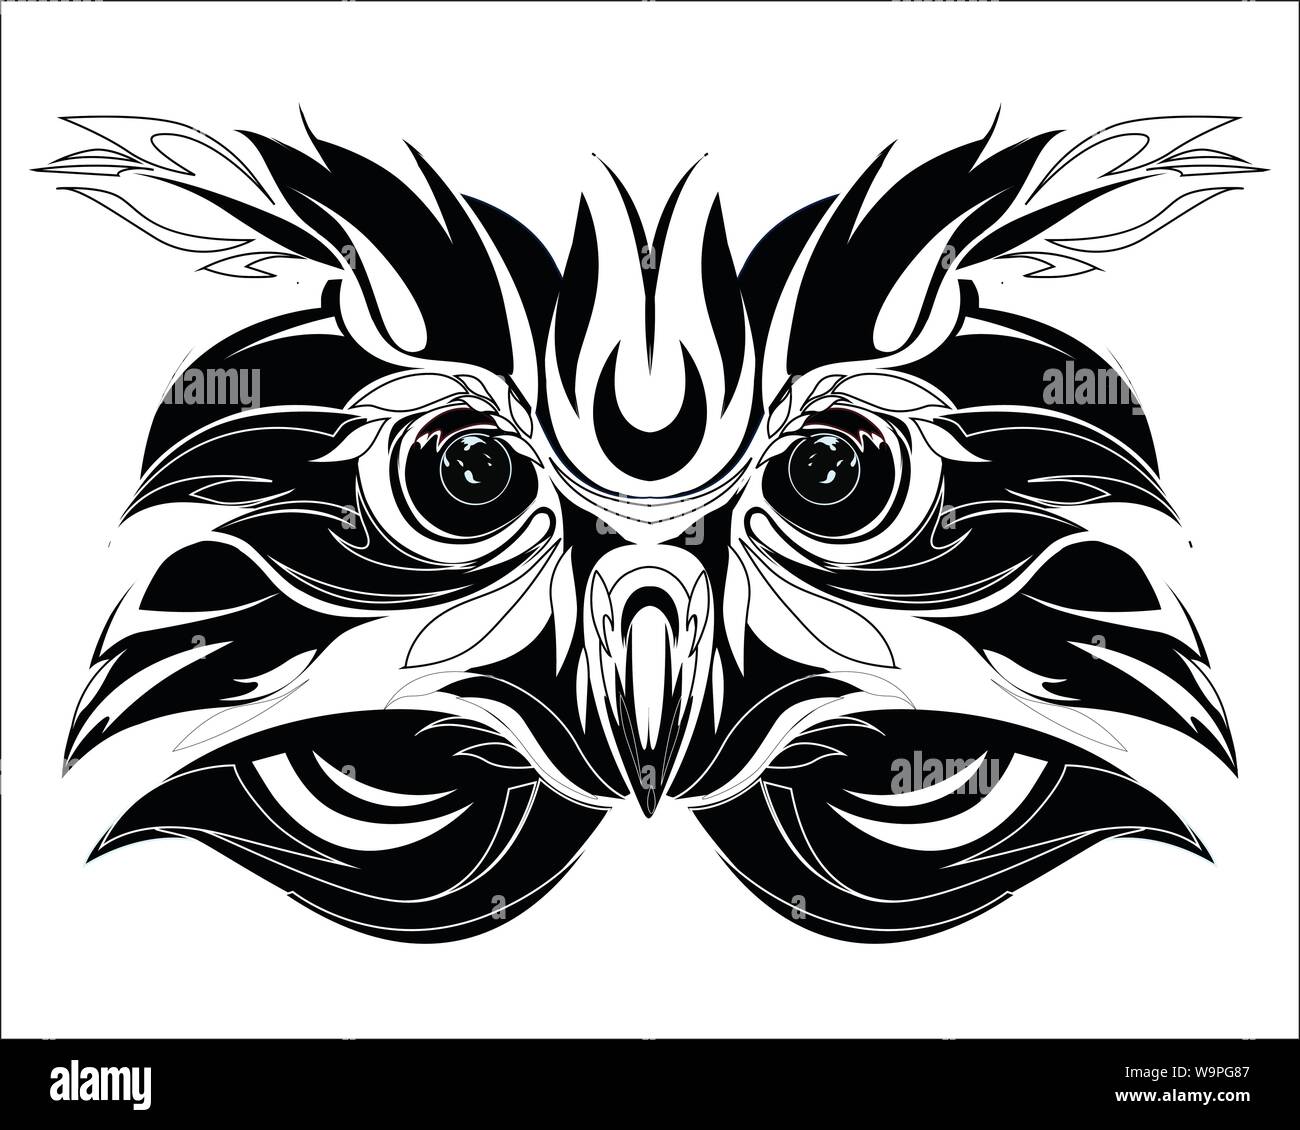 Owl tribal tattoo vector drawing Stock Vector